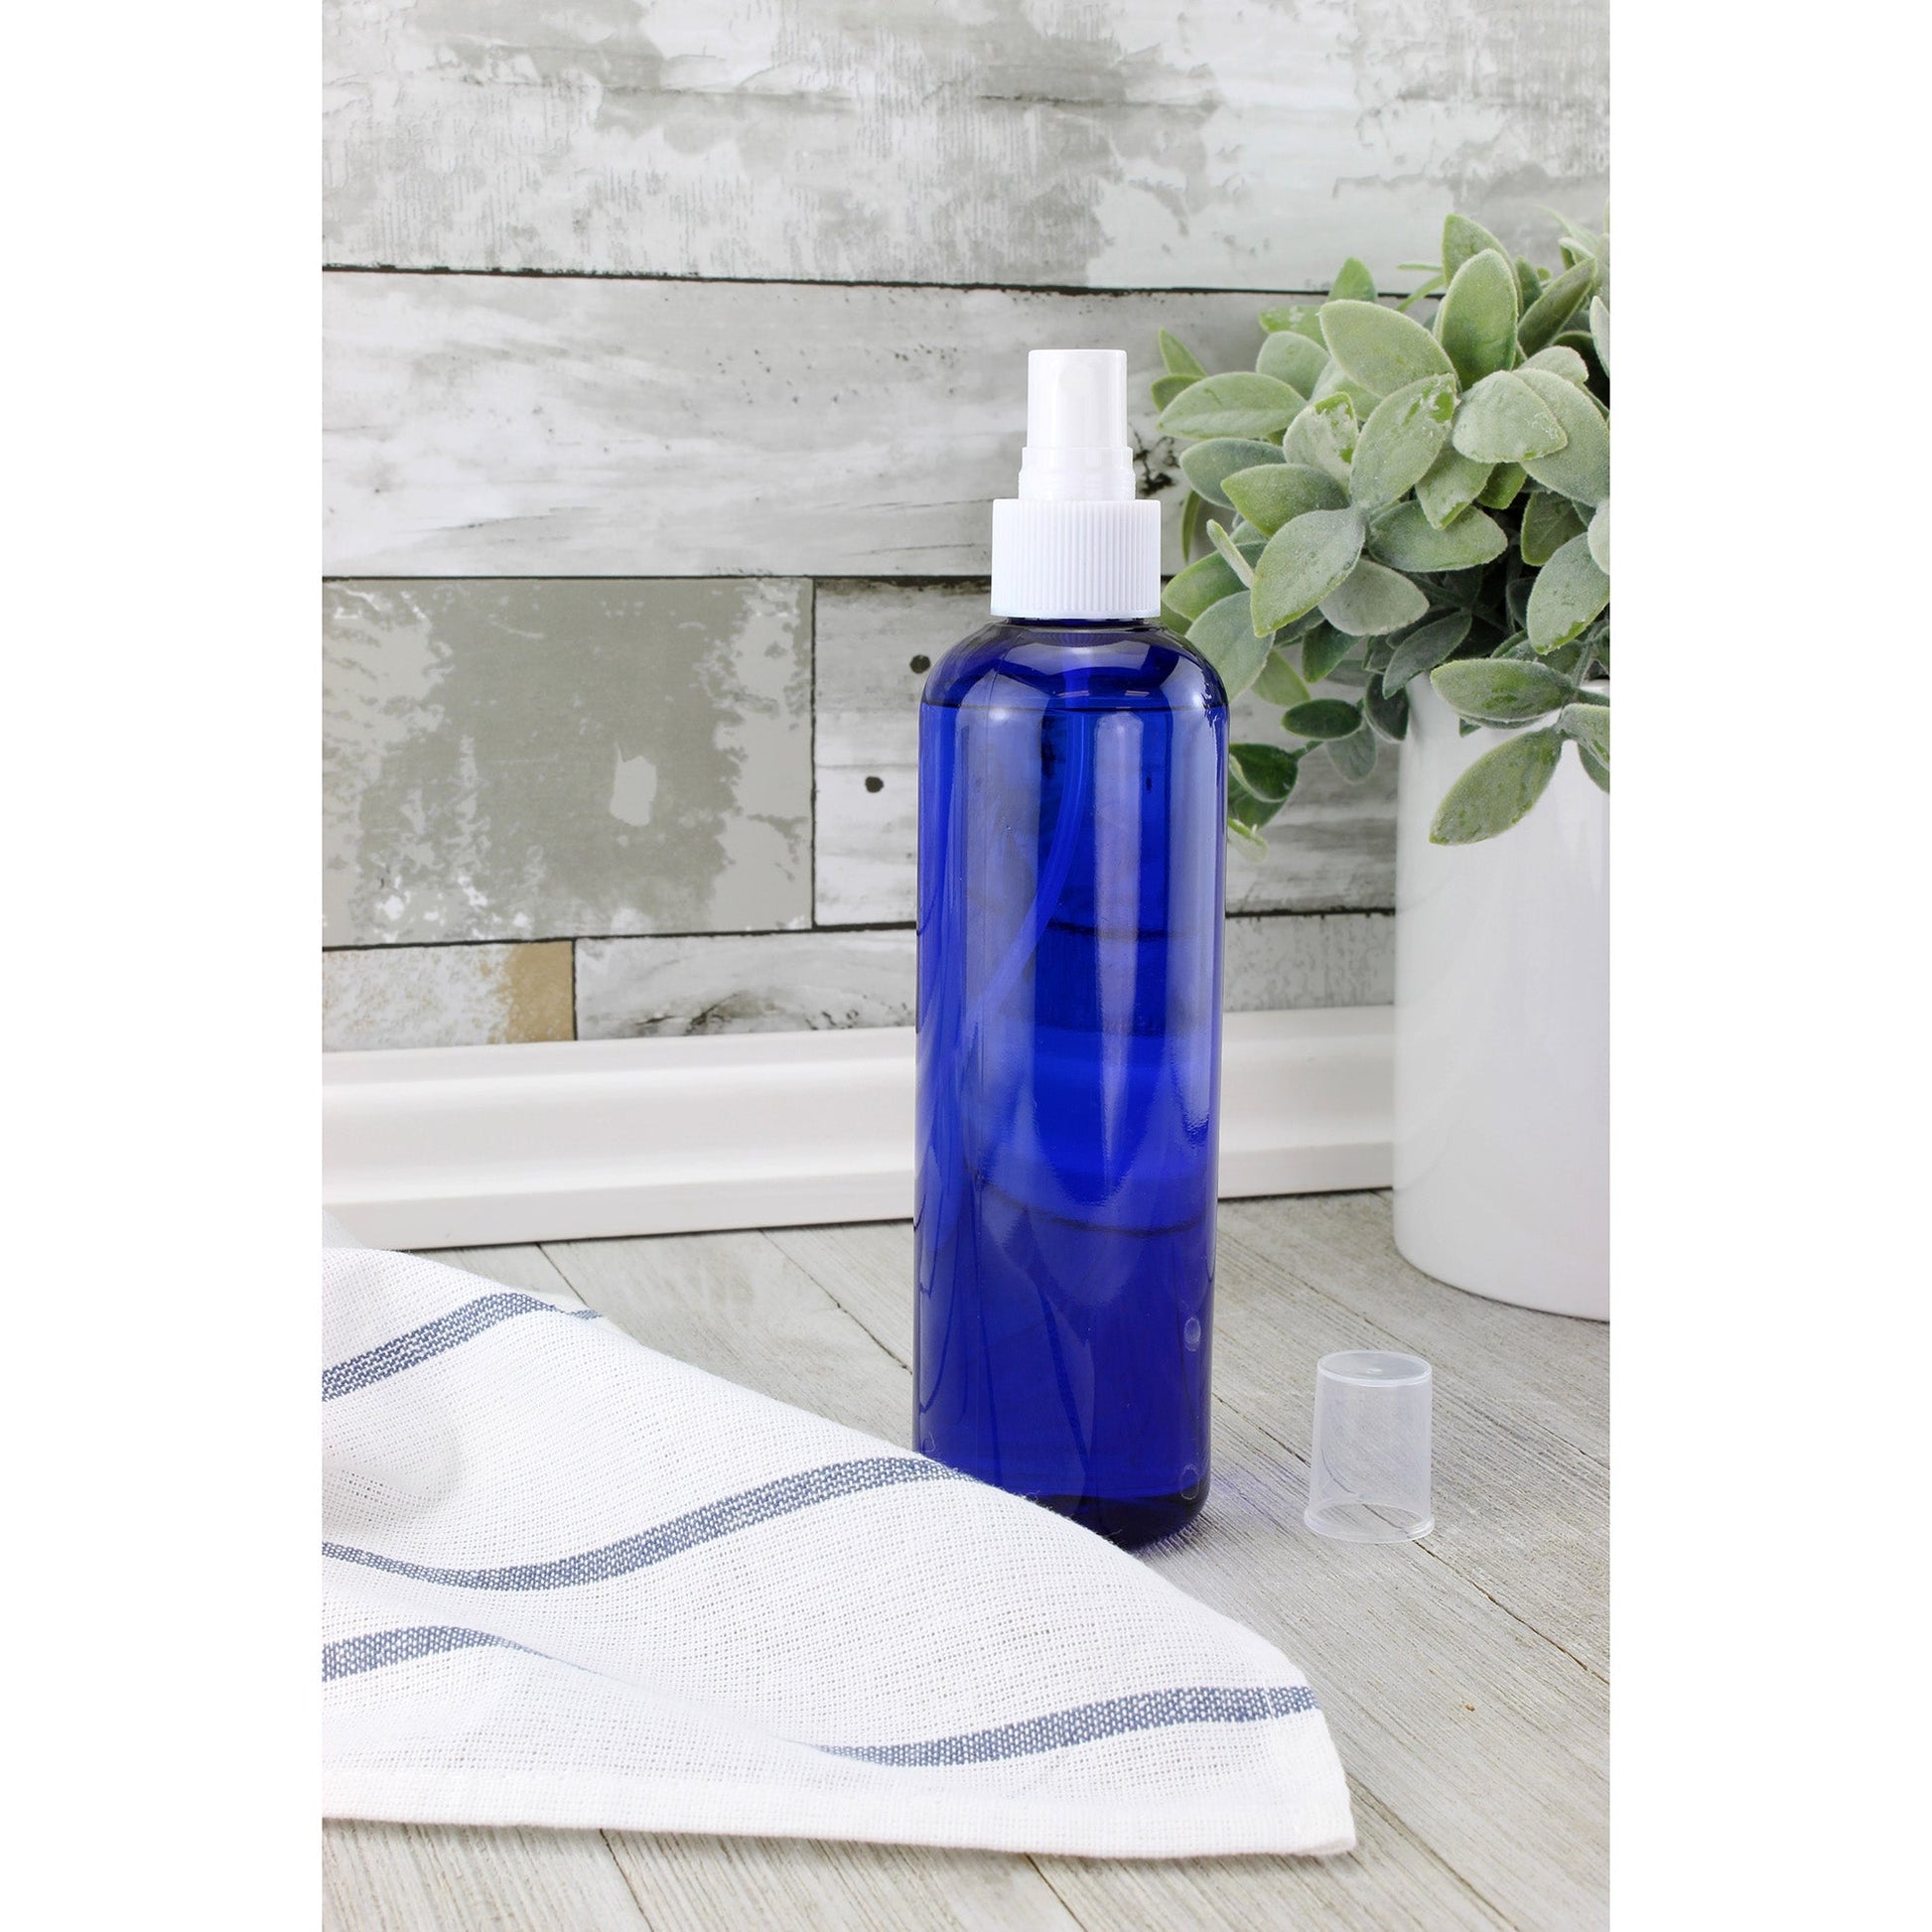 8oz Blue PLASTIC Spray Bottles with White Fine Mist Atomizers (6-Pack) - sh1805cb0Blue